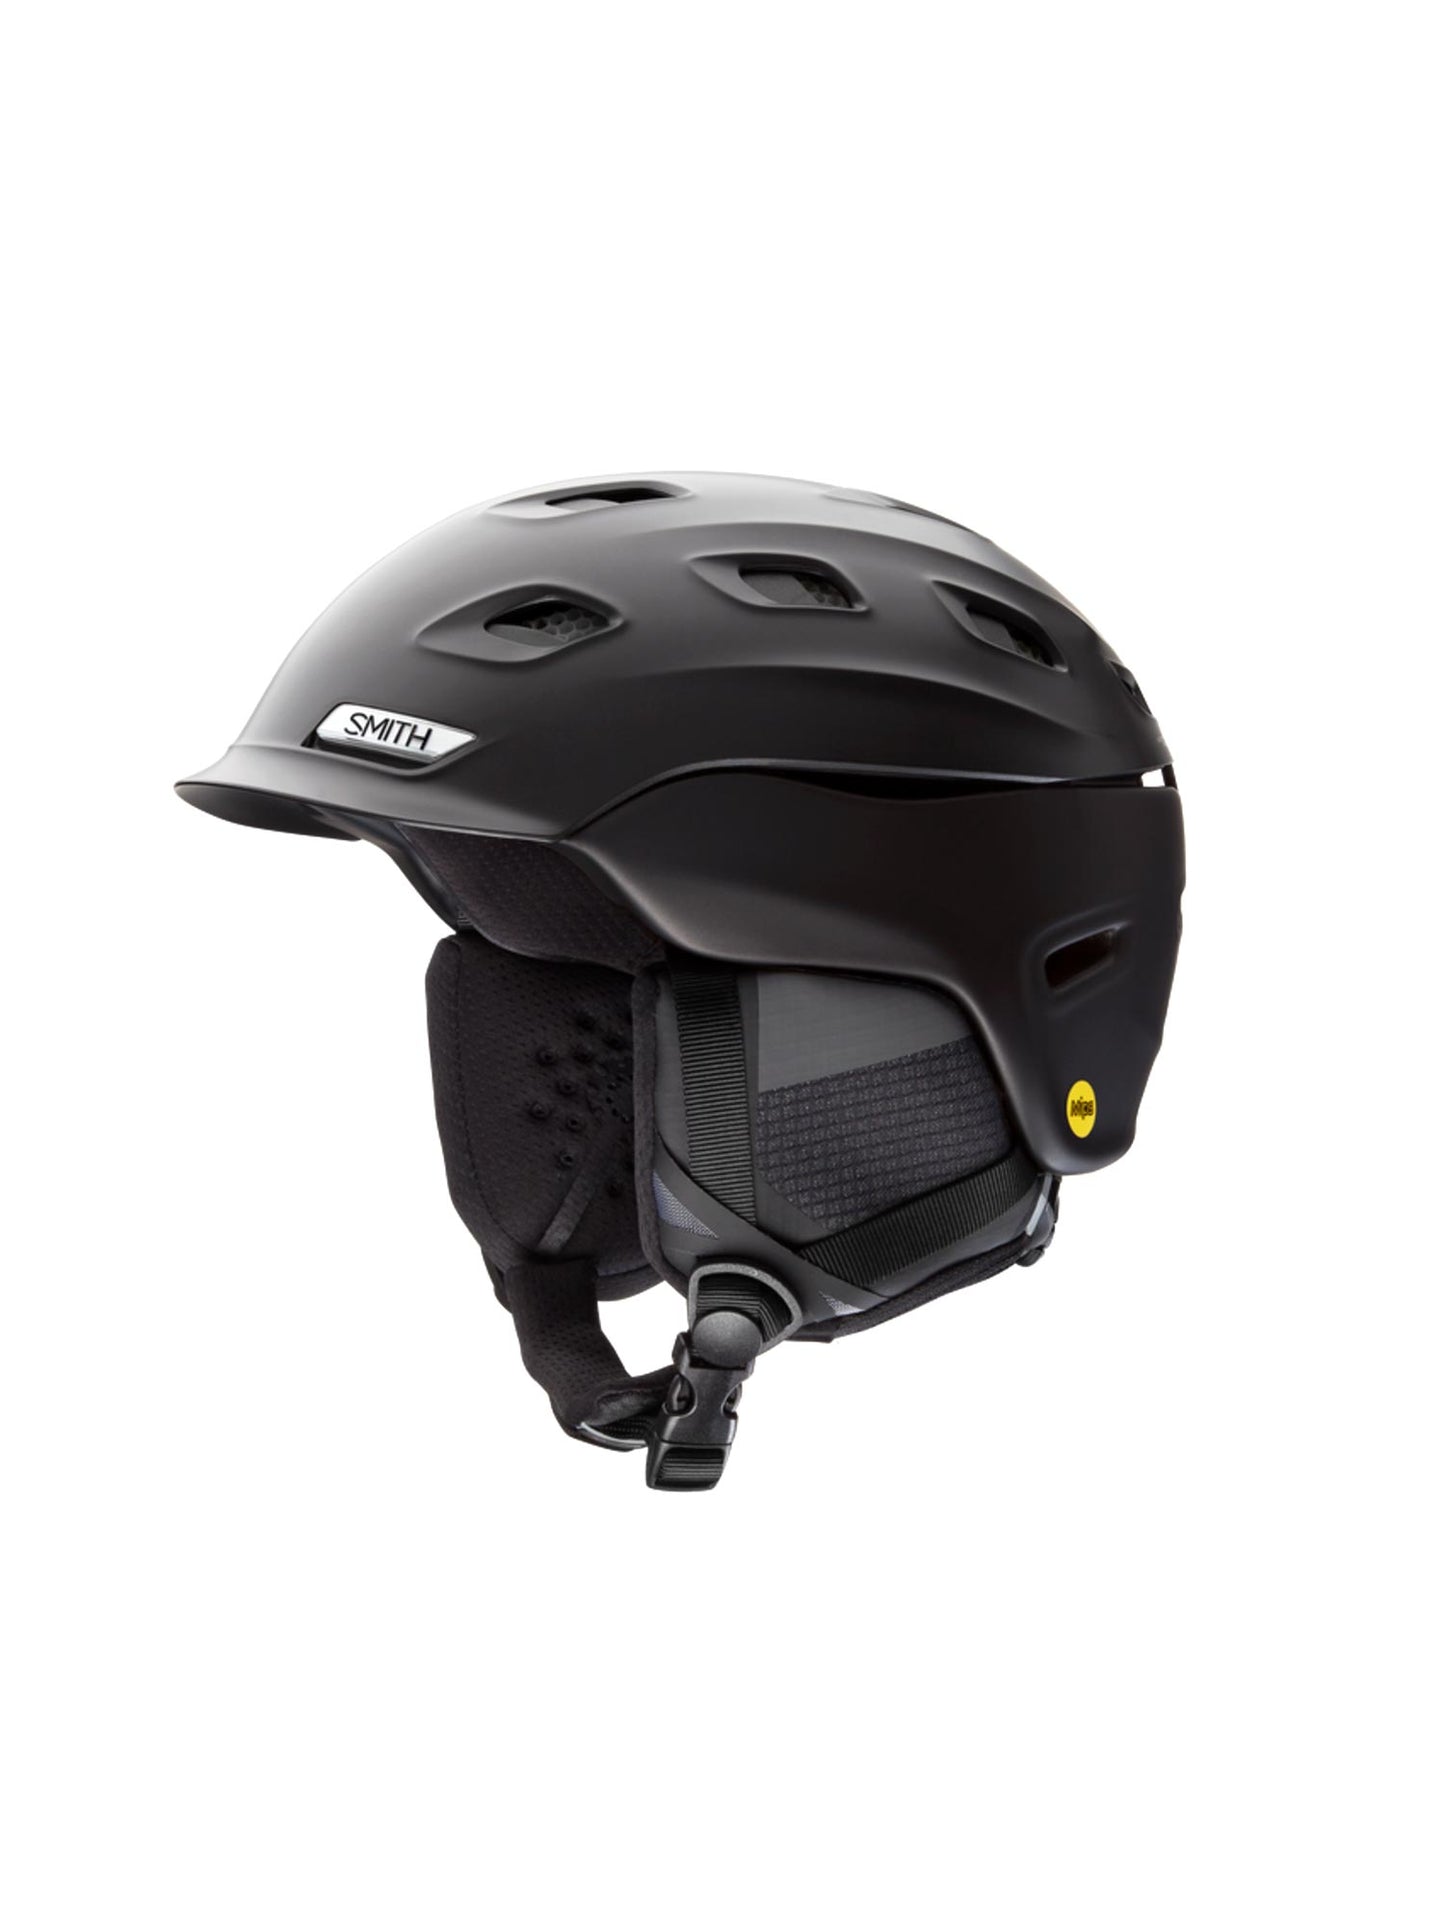 Smith Vantage ski helmet, black